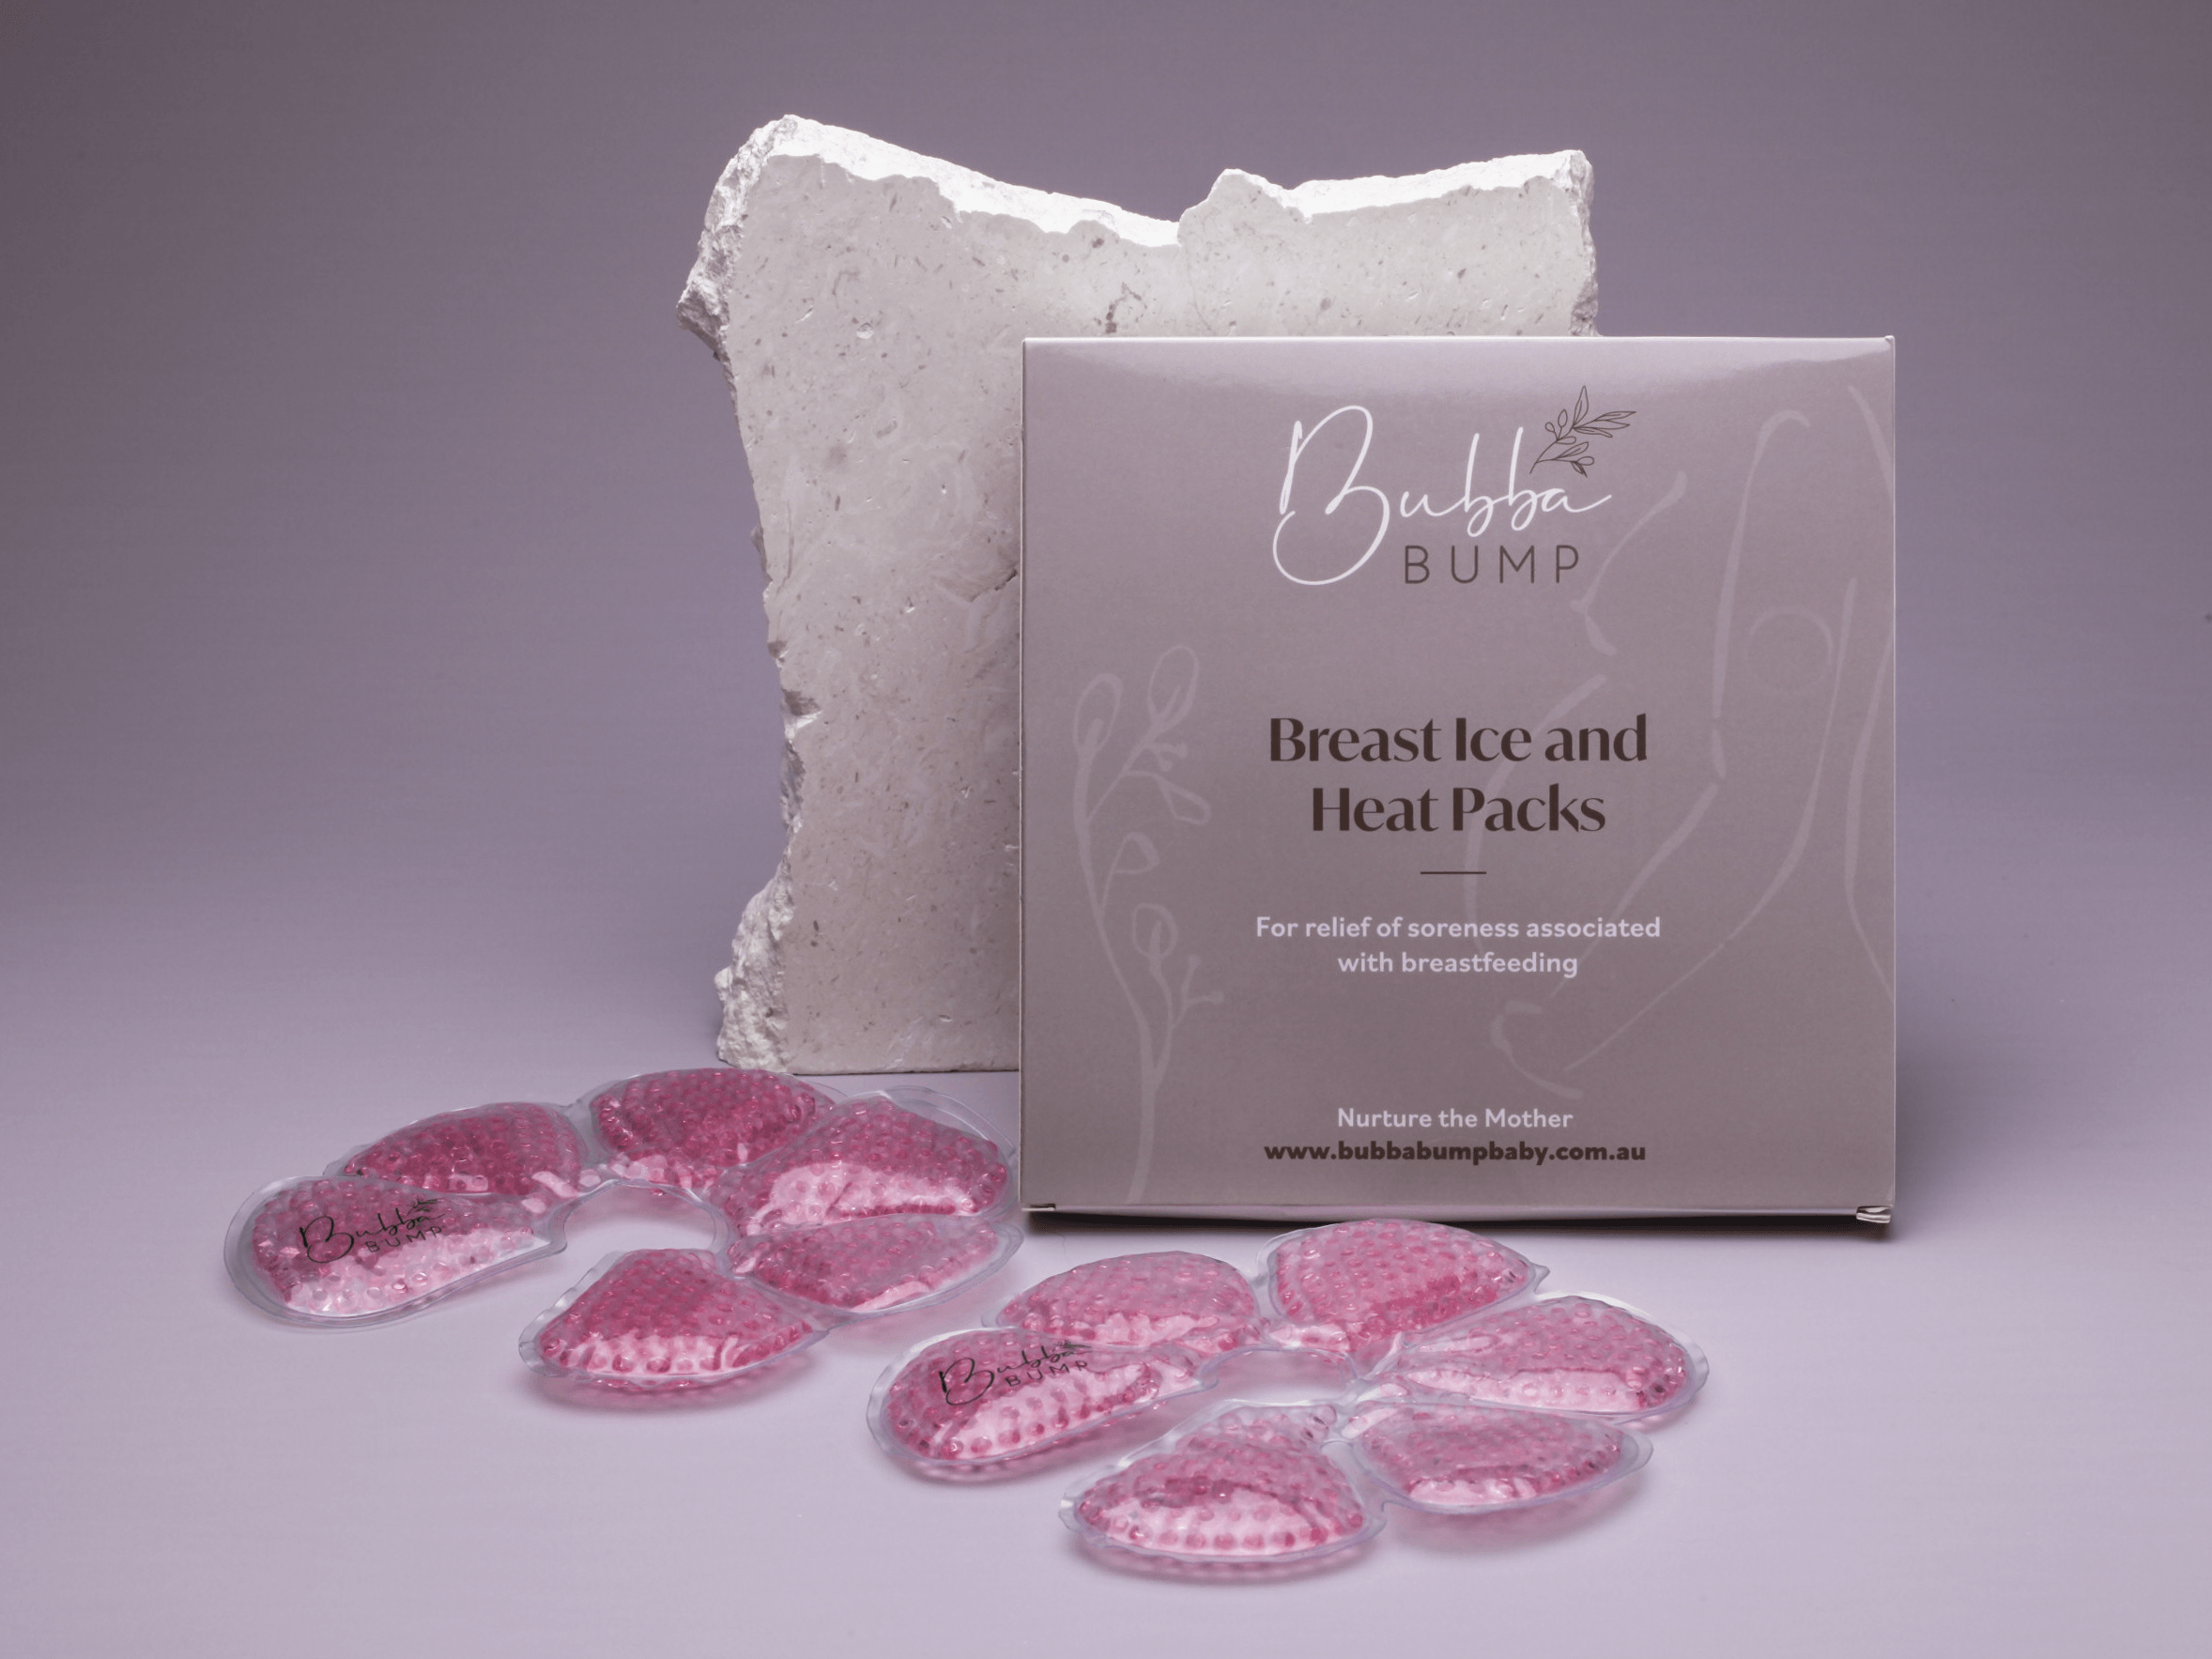 Buy Bubba Bump Organic Bamboo Breast Pads Online at Chemist Warehouse®